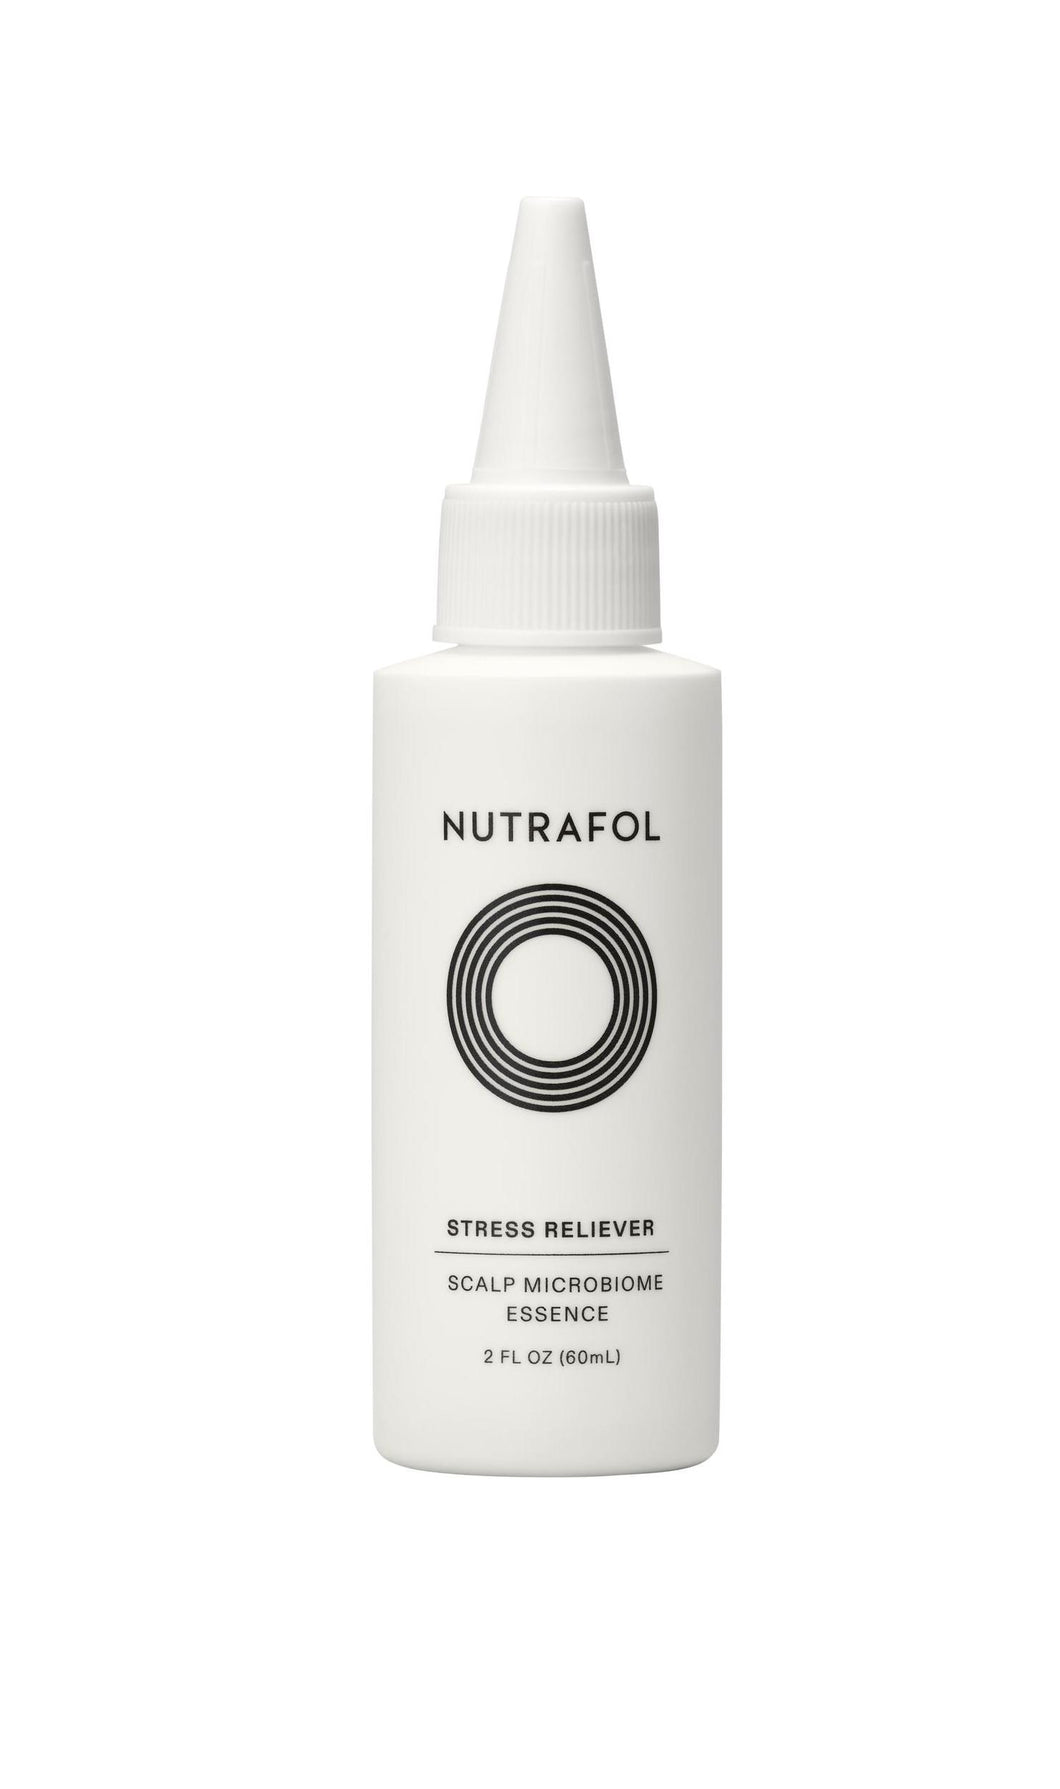 Nutrafol - Stress Reliever Essence white twist top bottle.